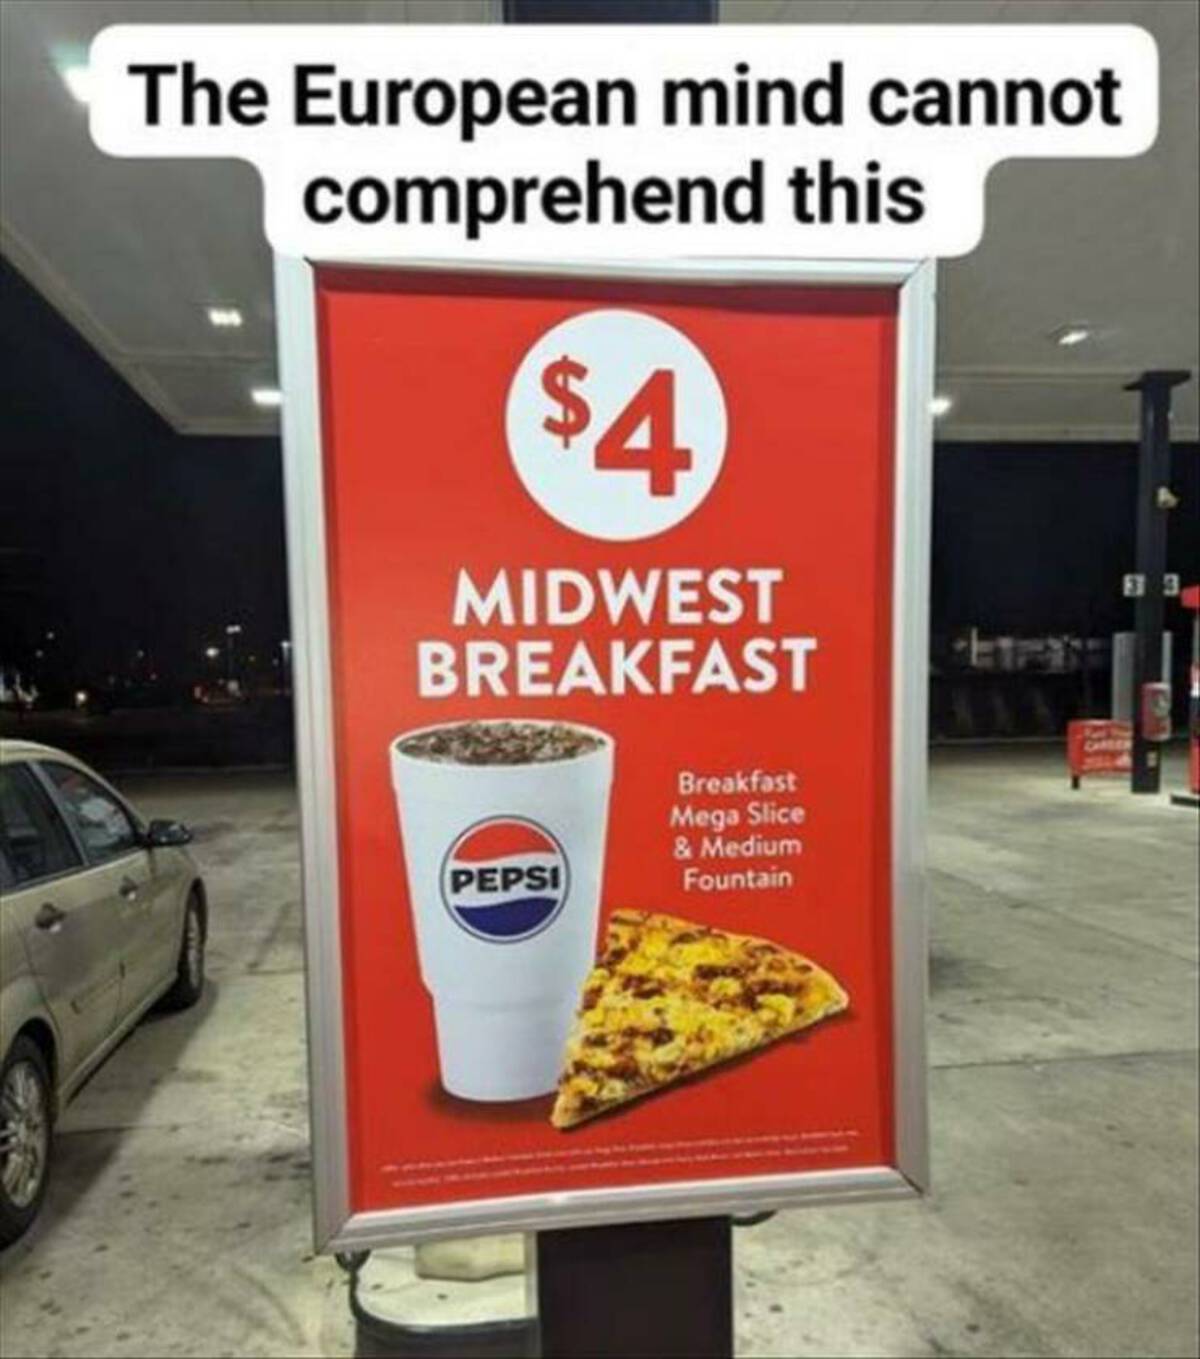 banner - The European mind cannot comprehend this $4 Midwest Breakfast Pepsi Breakfast Mega Slice & Medium Fountain